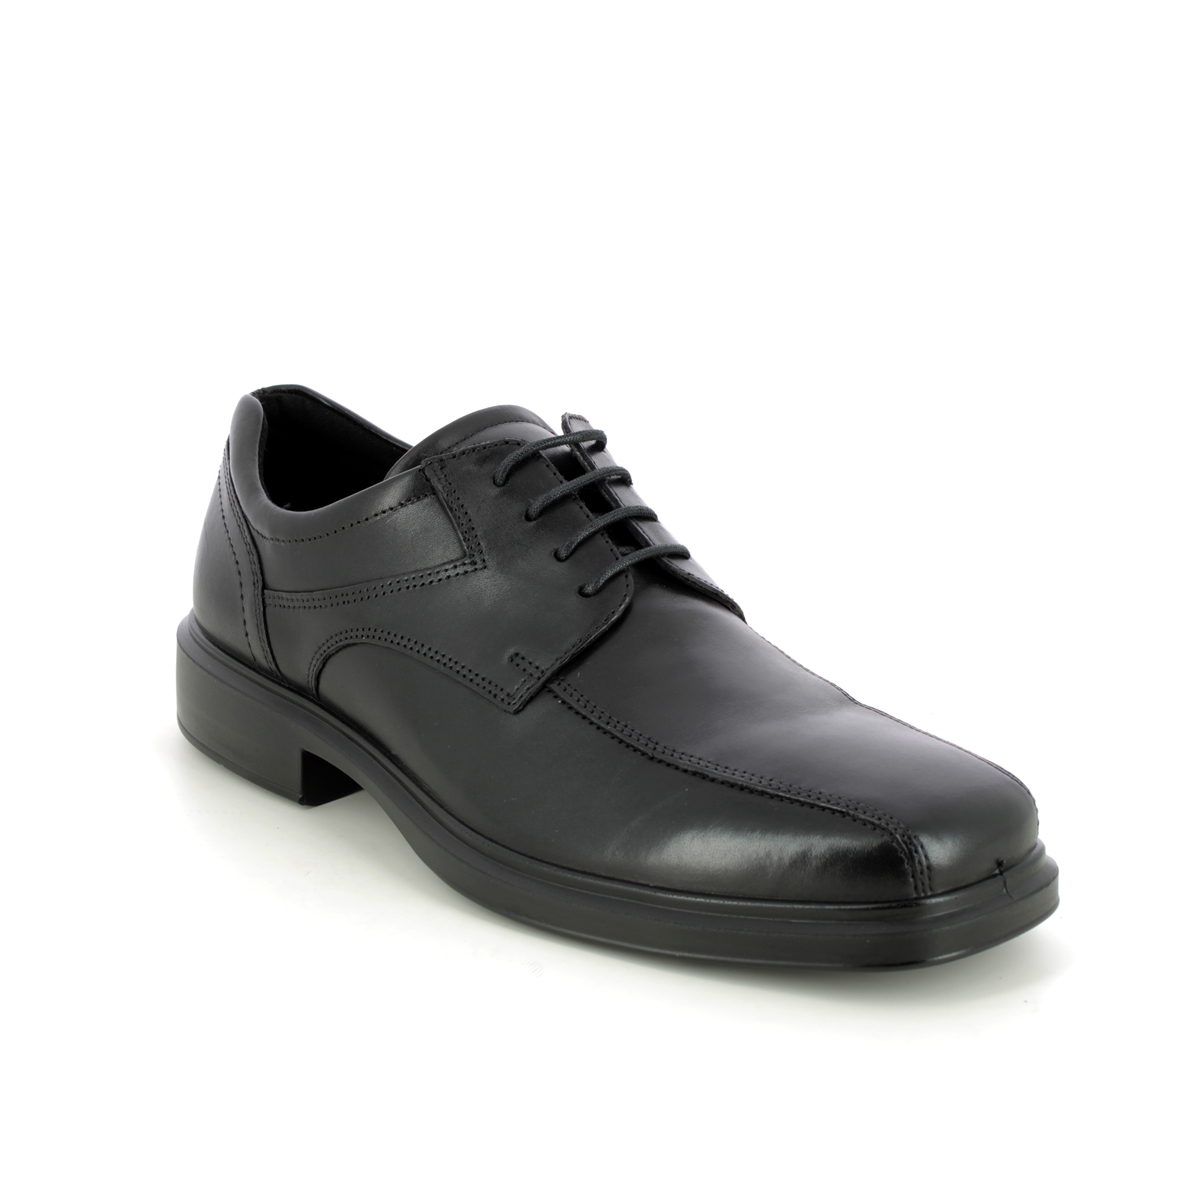 Ecco Helsinki 2 Tram Black Leather Mens Formal Shoes 500174-01001 In Size 43 In Plain Black Leather